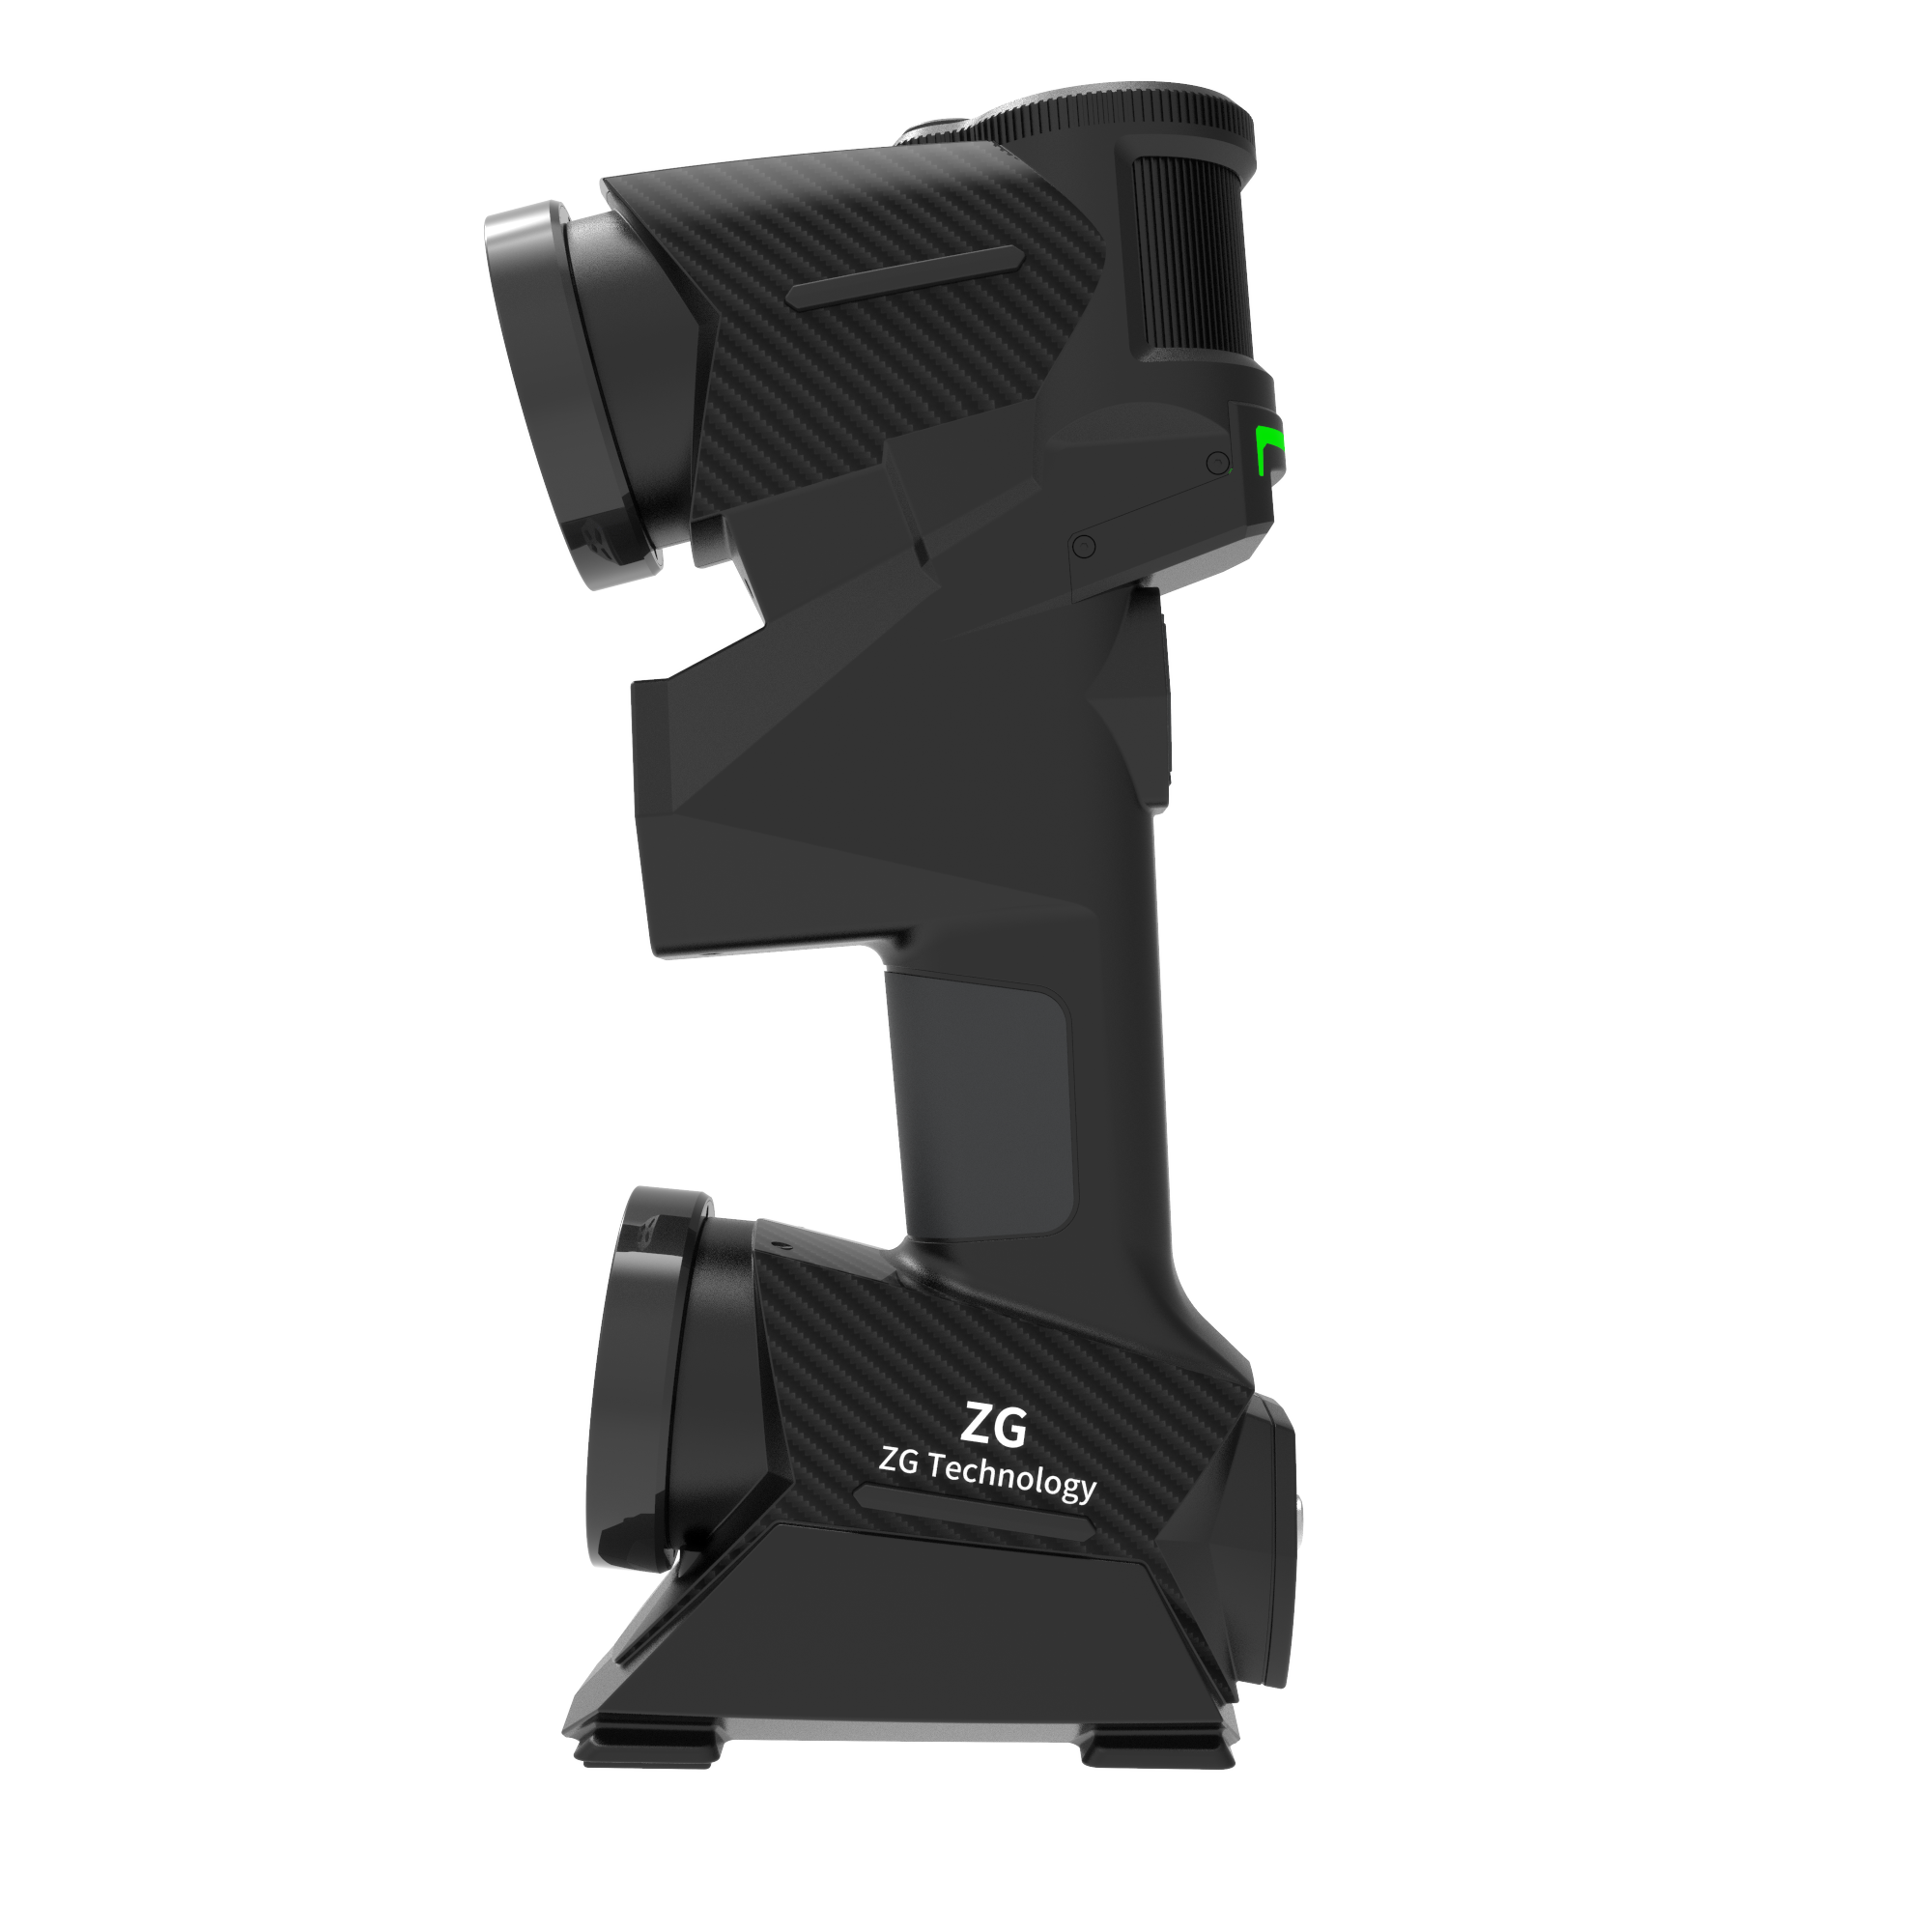 MarvelScanトラッカー無料マーカー無料自動車部品検査用の多用途3Dスキャナー